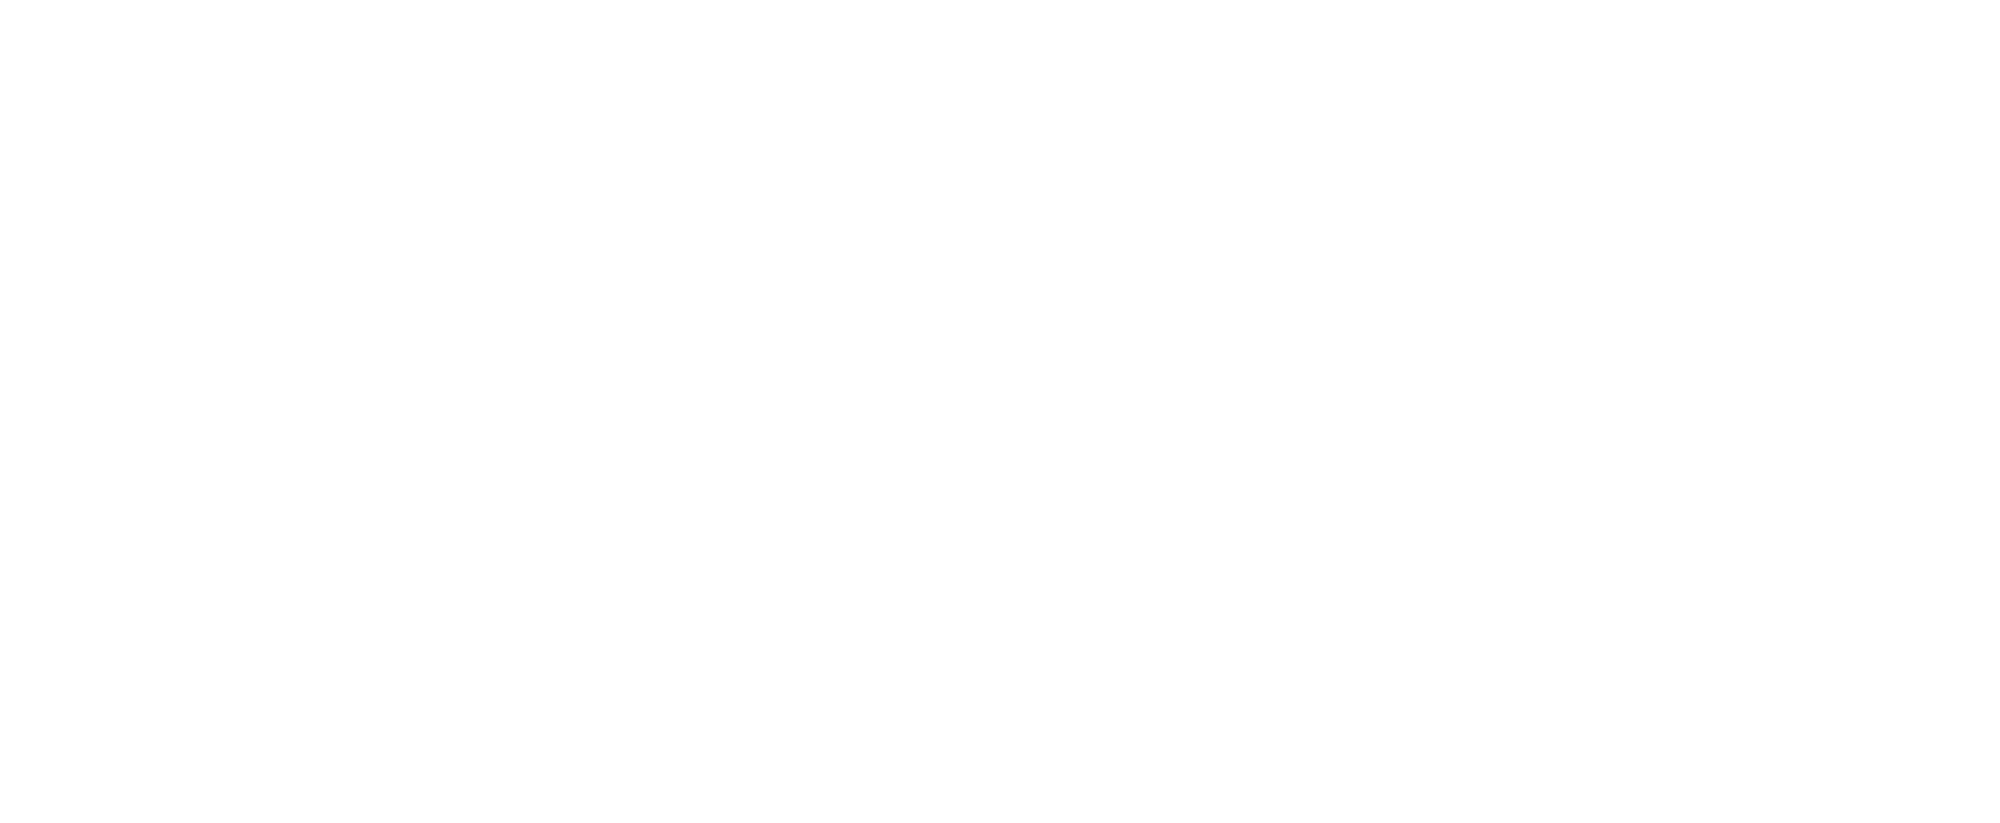 Fresh-Wind Ministries